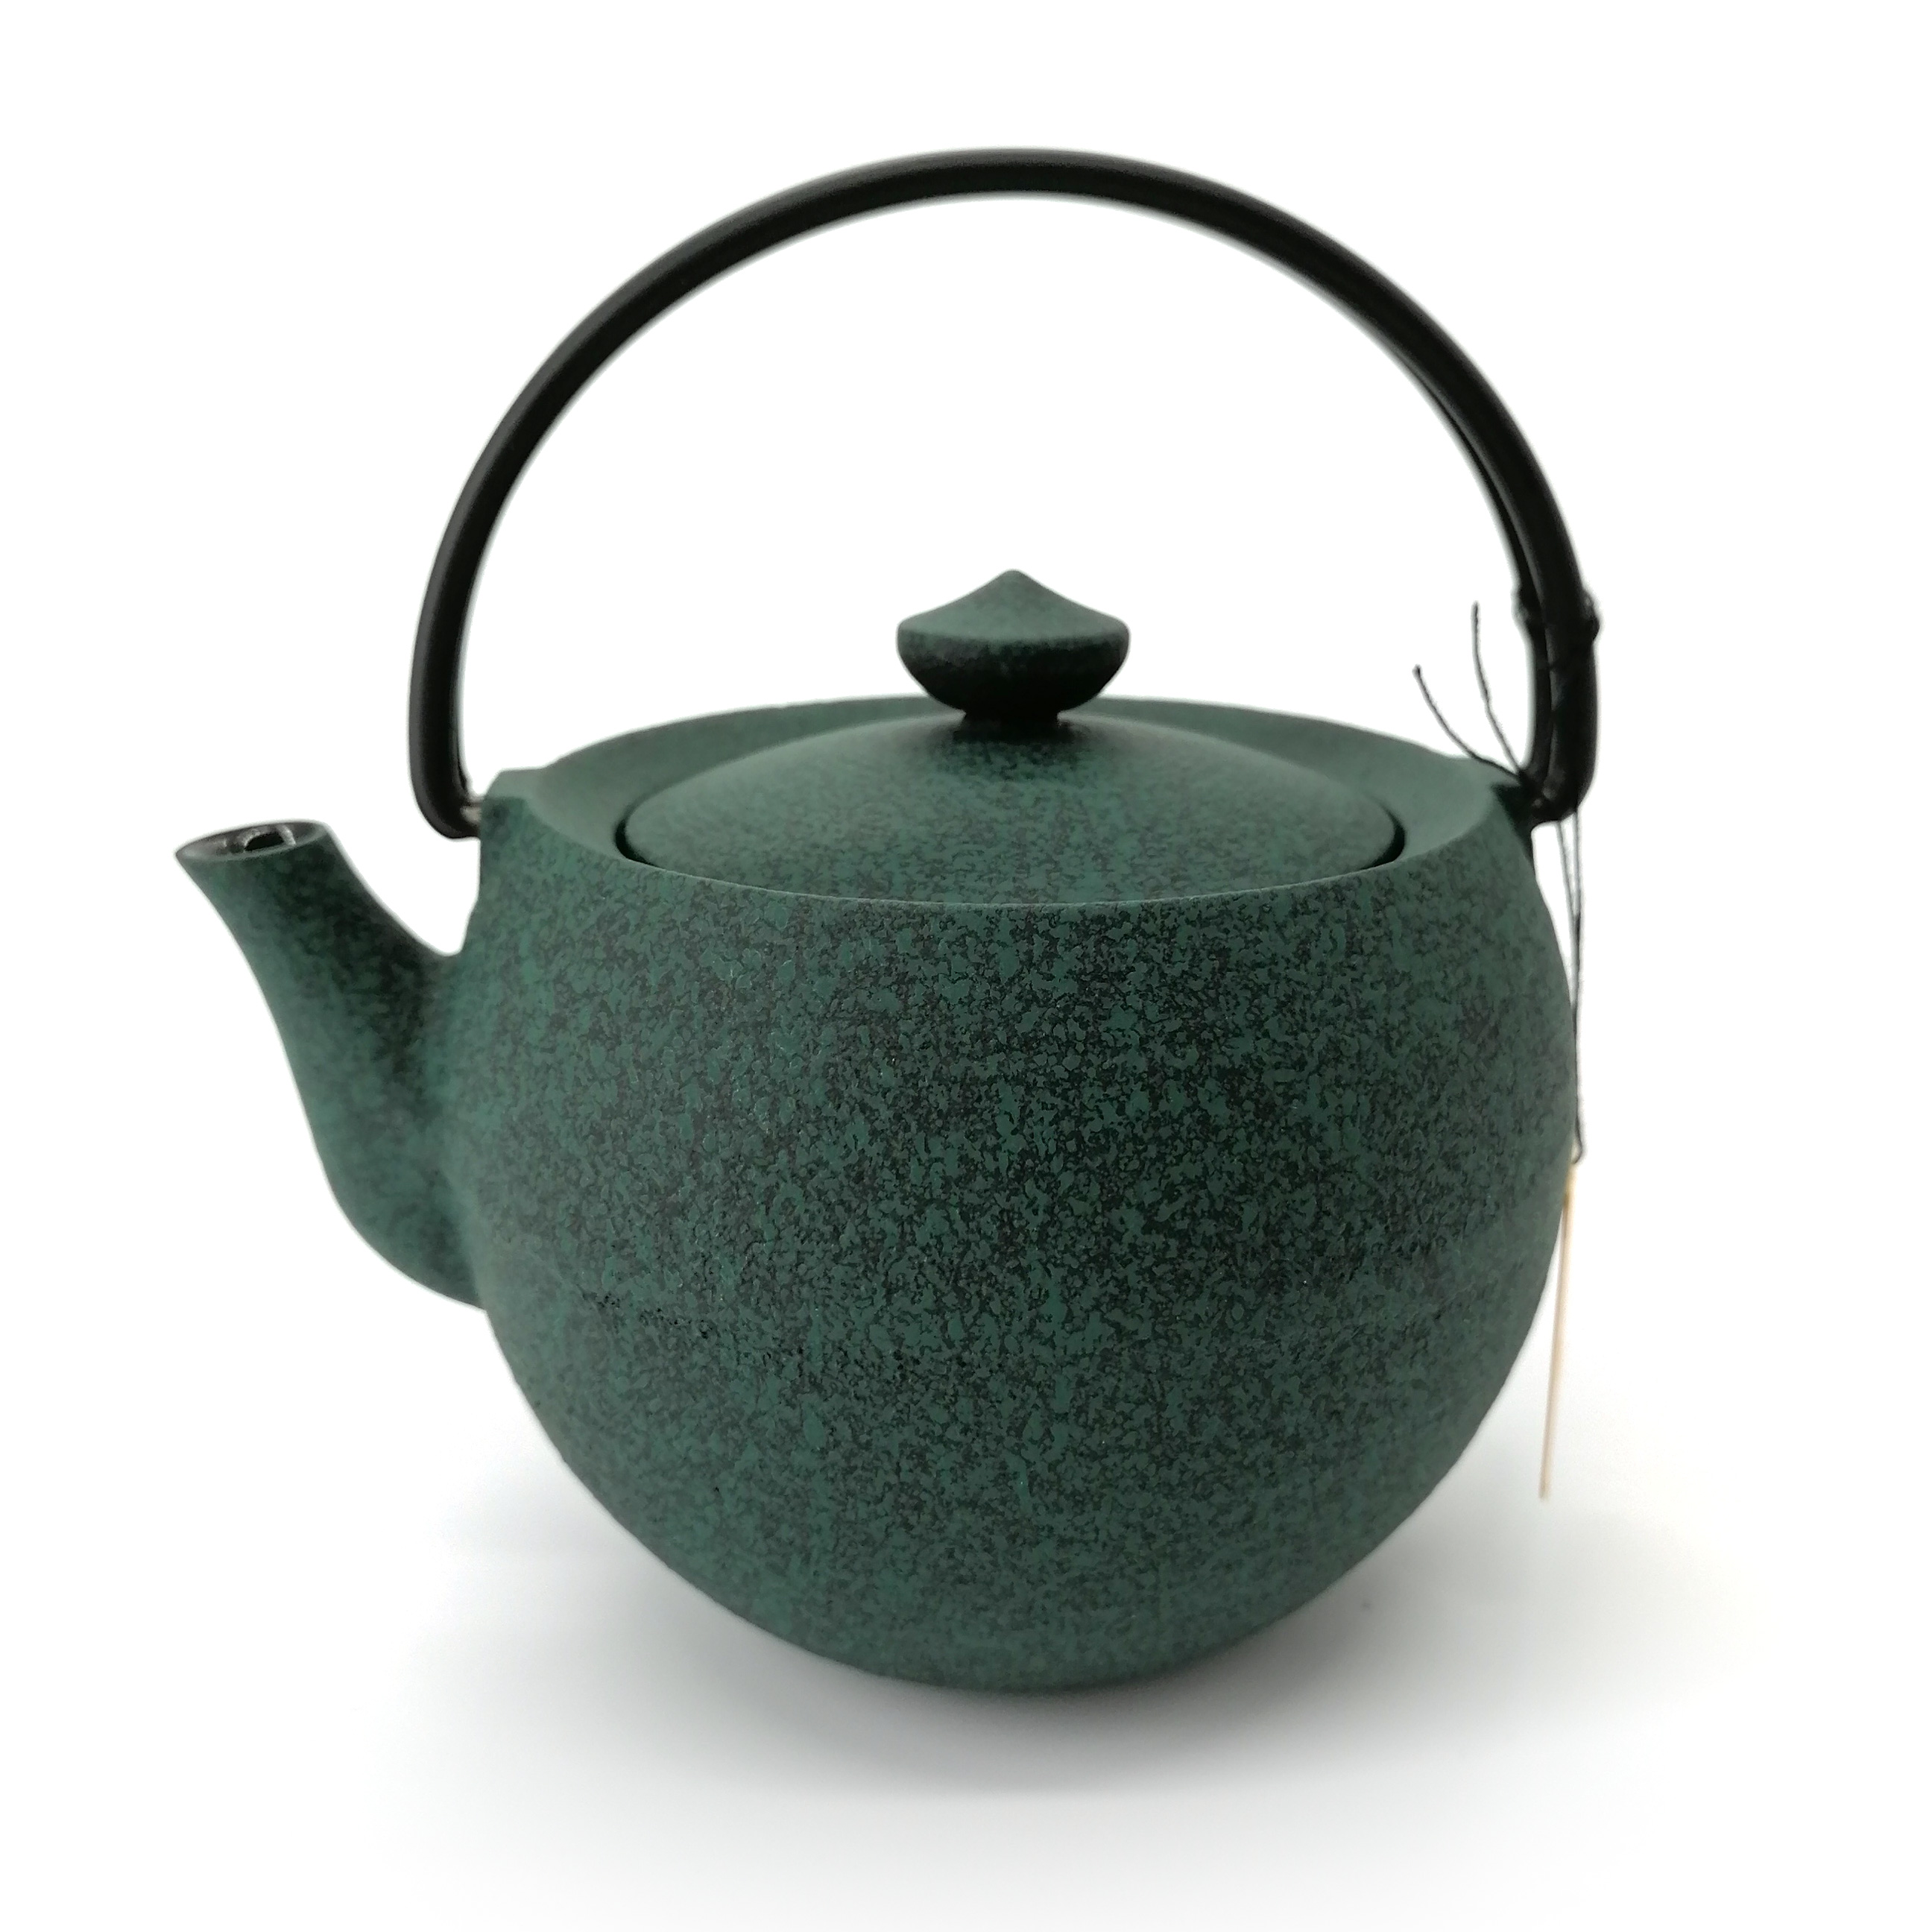 https://tokyo-market.fr/24151/small-round-japanese-prestige-cast-iron-teapot-chushin-kobo-marutama-green.jpg